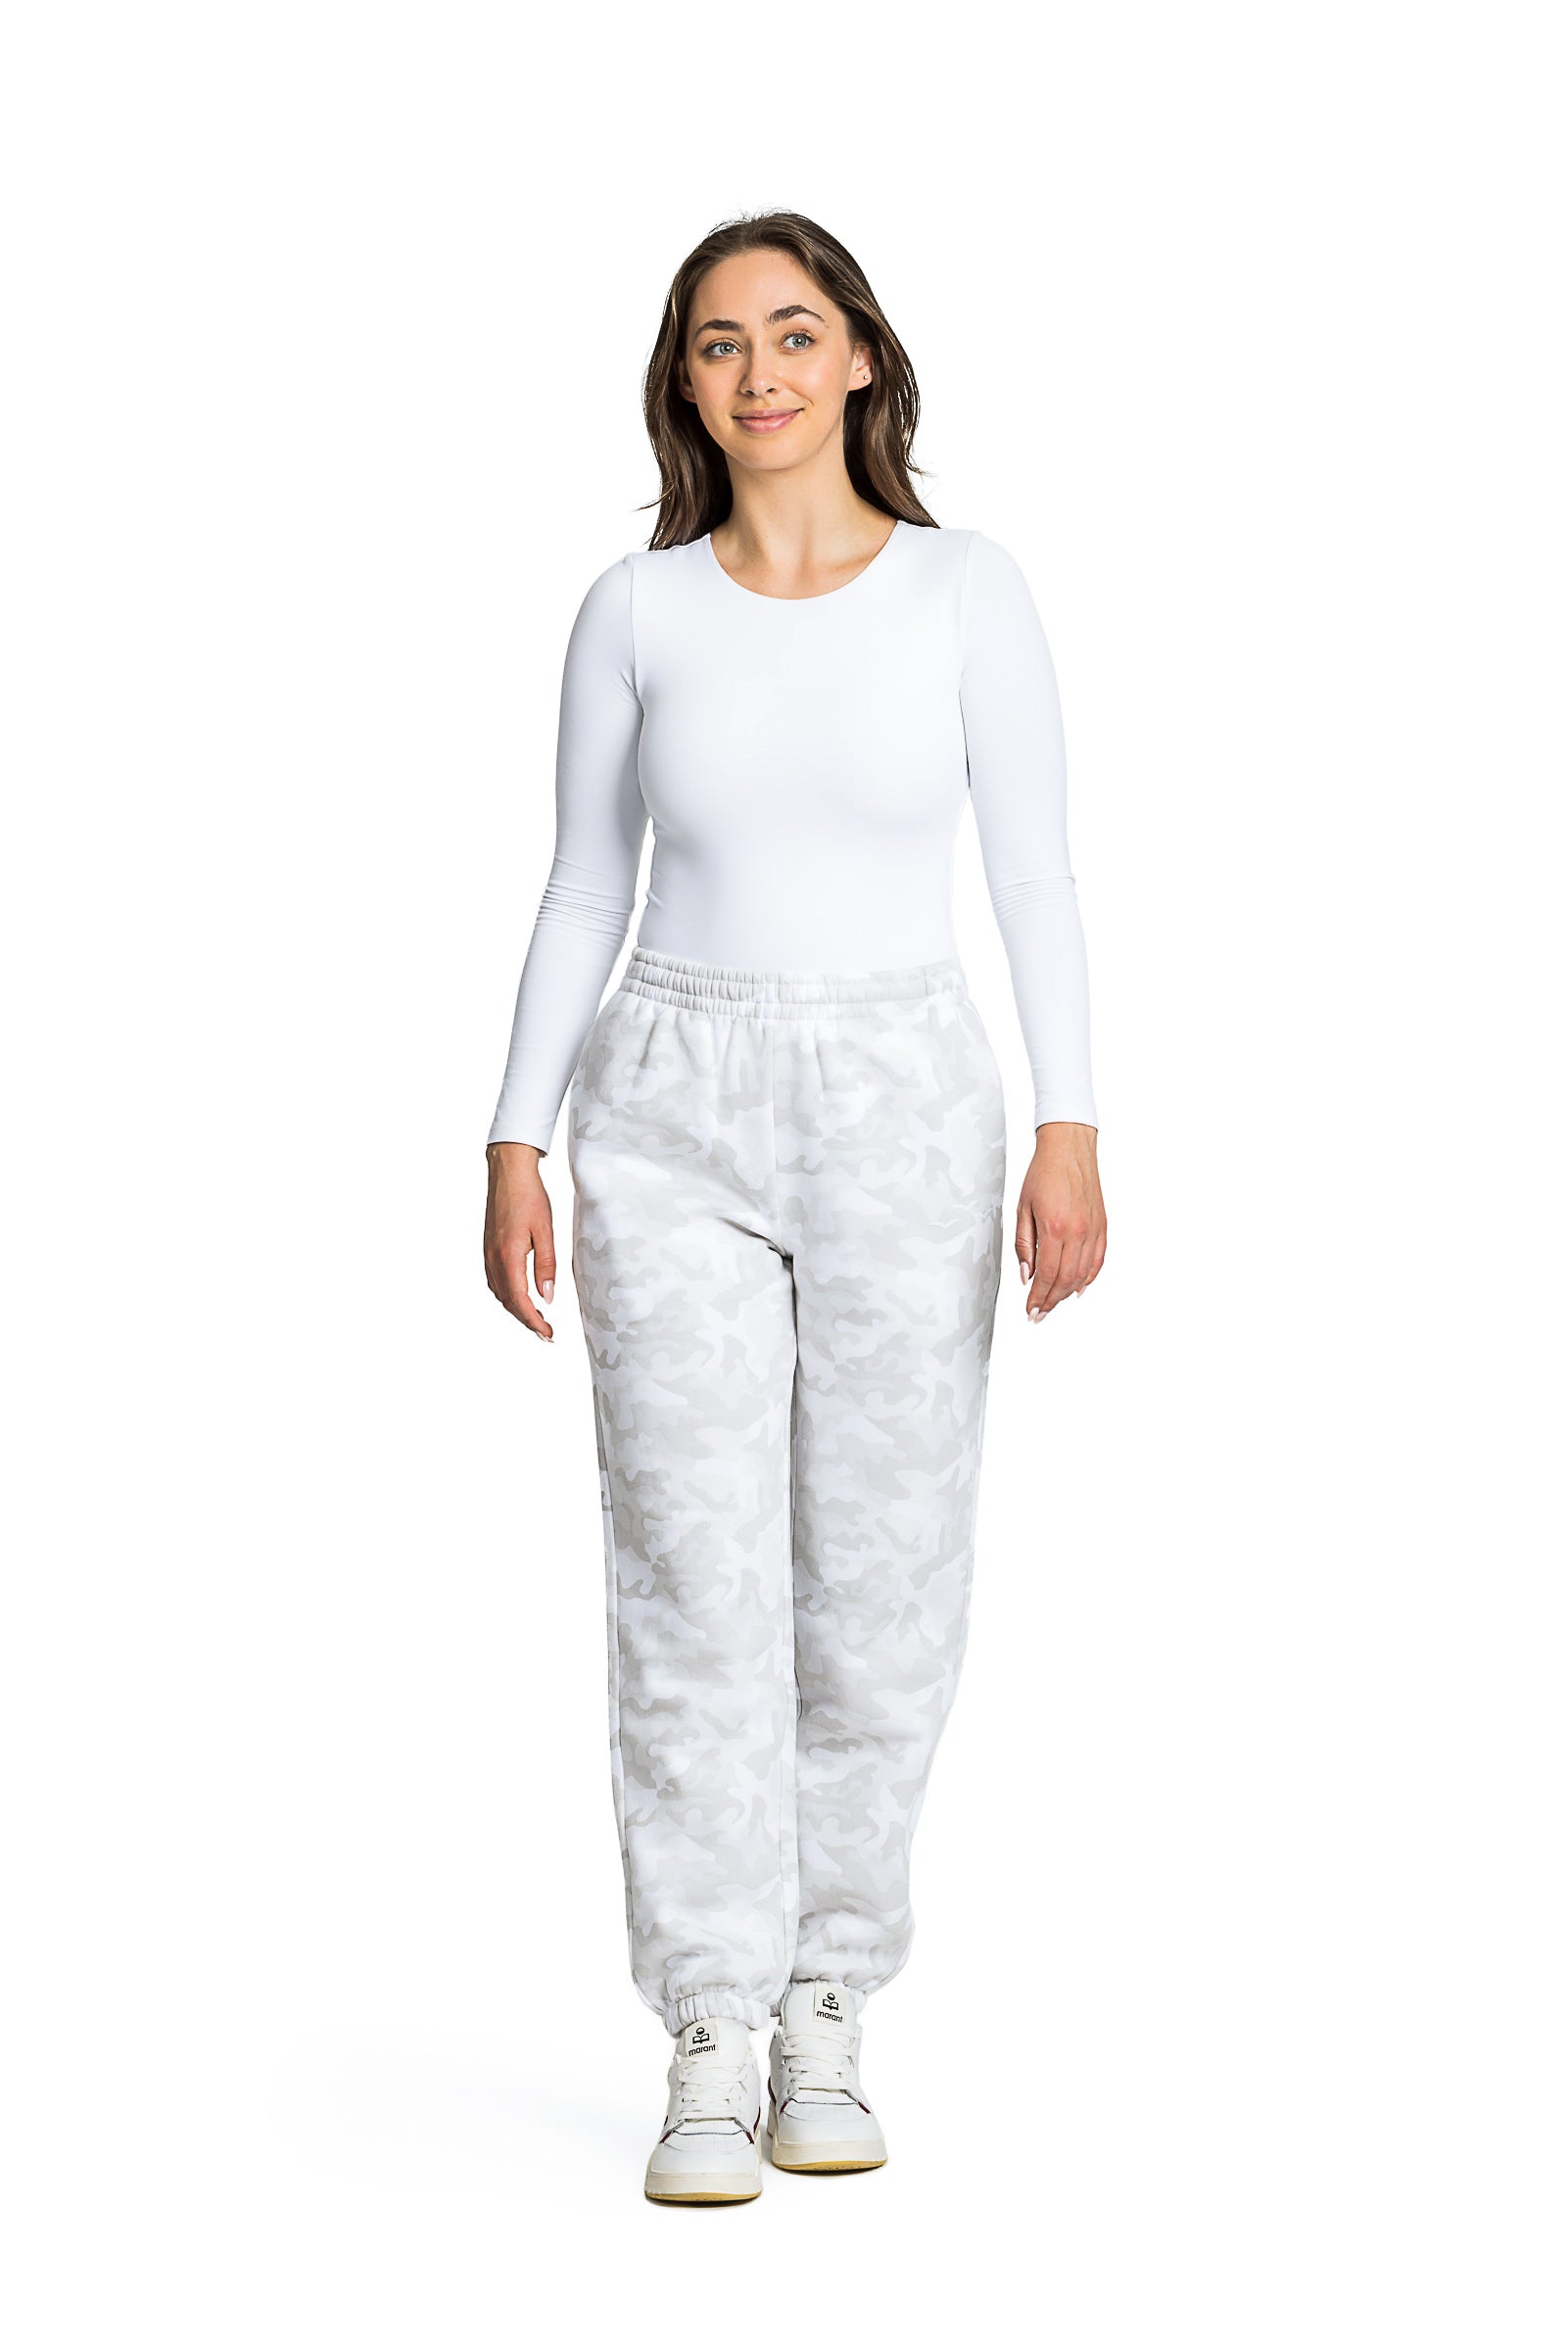 ZXHACSJ Women Fashion Soild Plush Thickened Sweatpants Harlan Pants Loose  Large Warm Casual Pants Gray L 